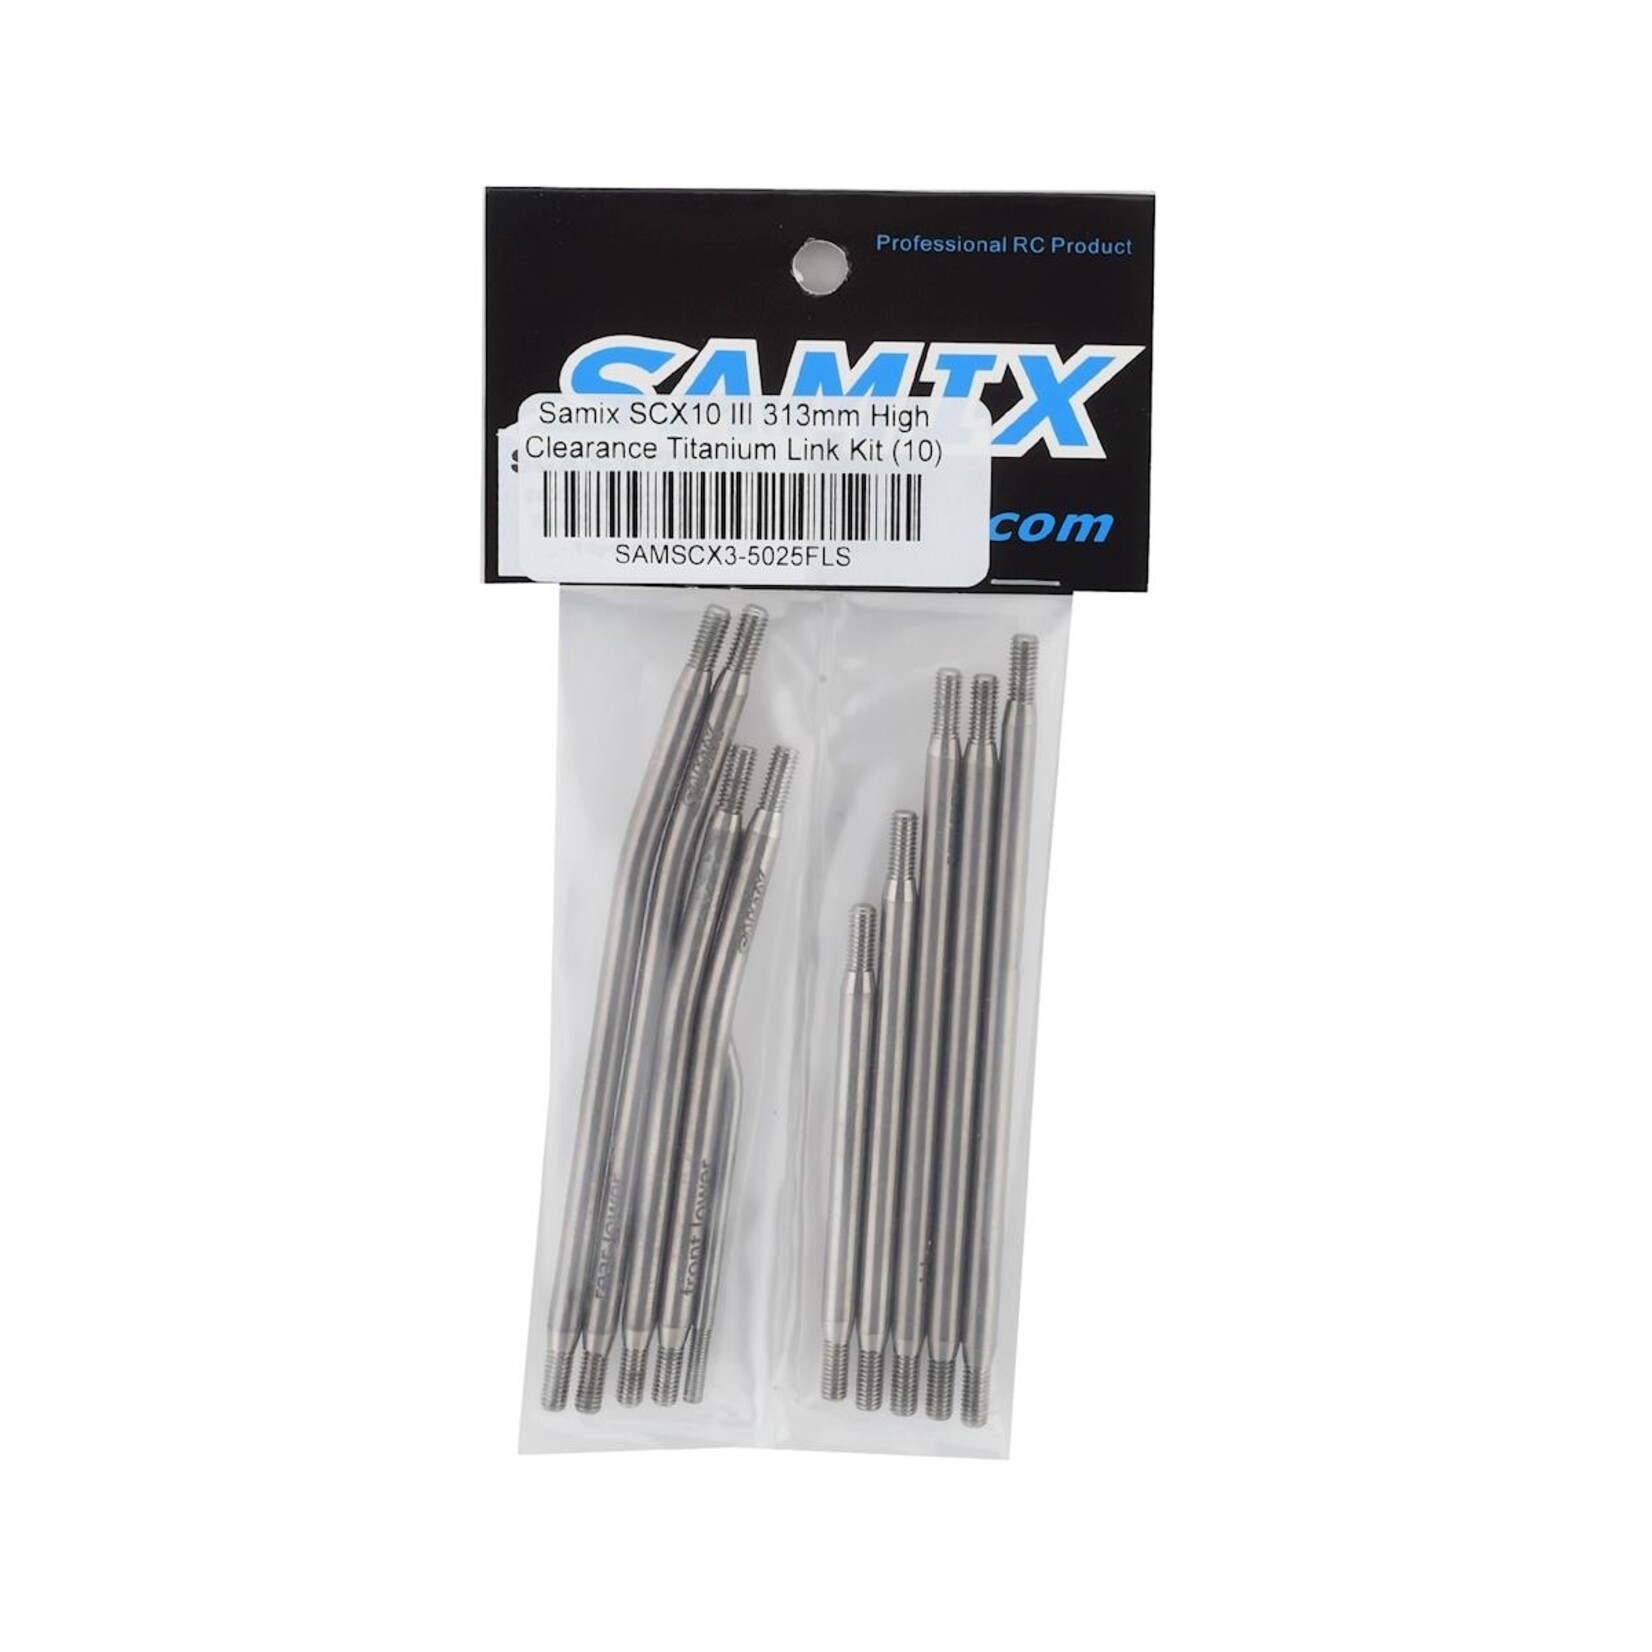 Samix Samix SCX10 III 313mm High Clearance Titanium Link Kit (10) #SAMSCX3-5025FLS